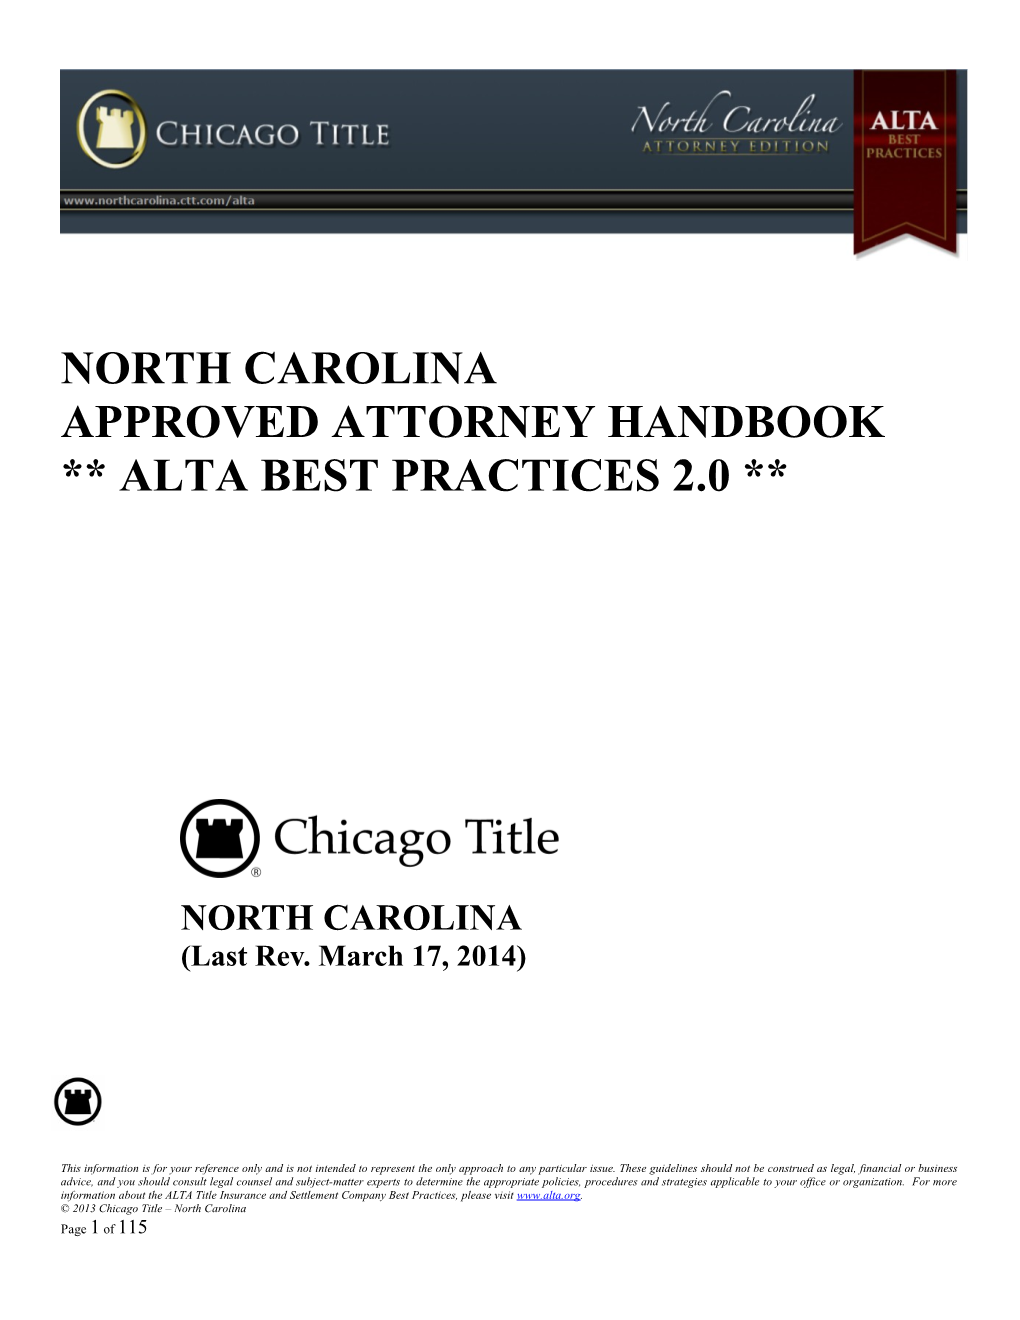 Approved Attorney Handbook